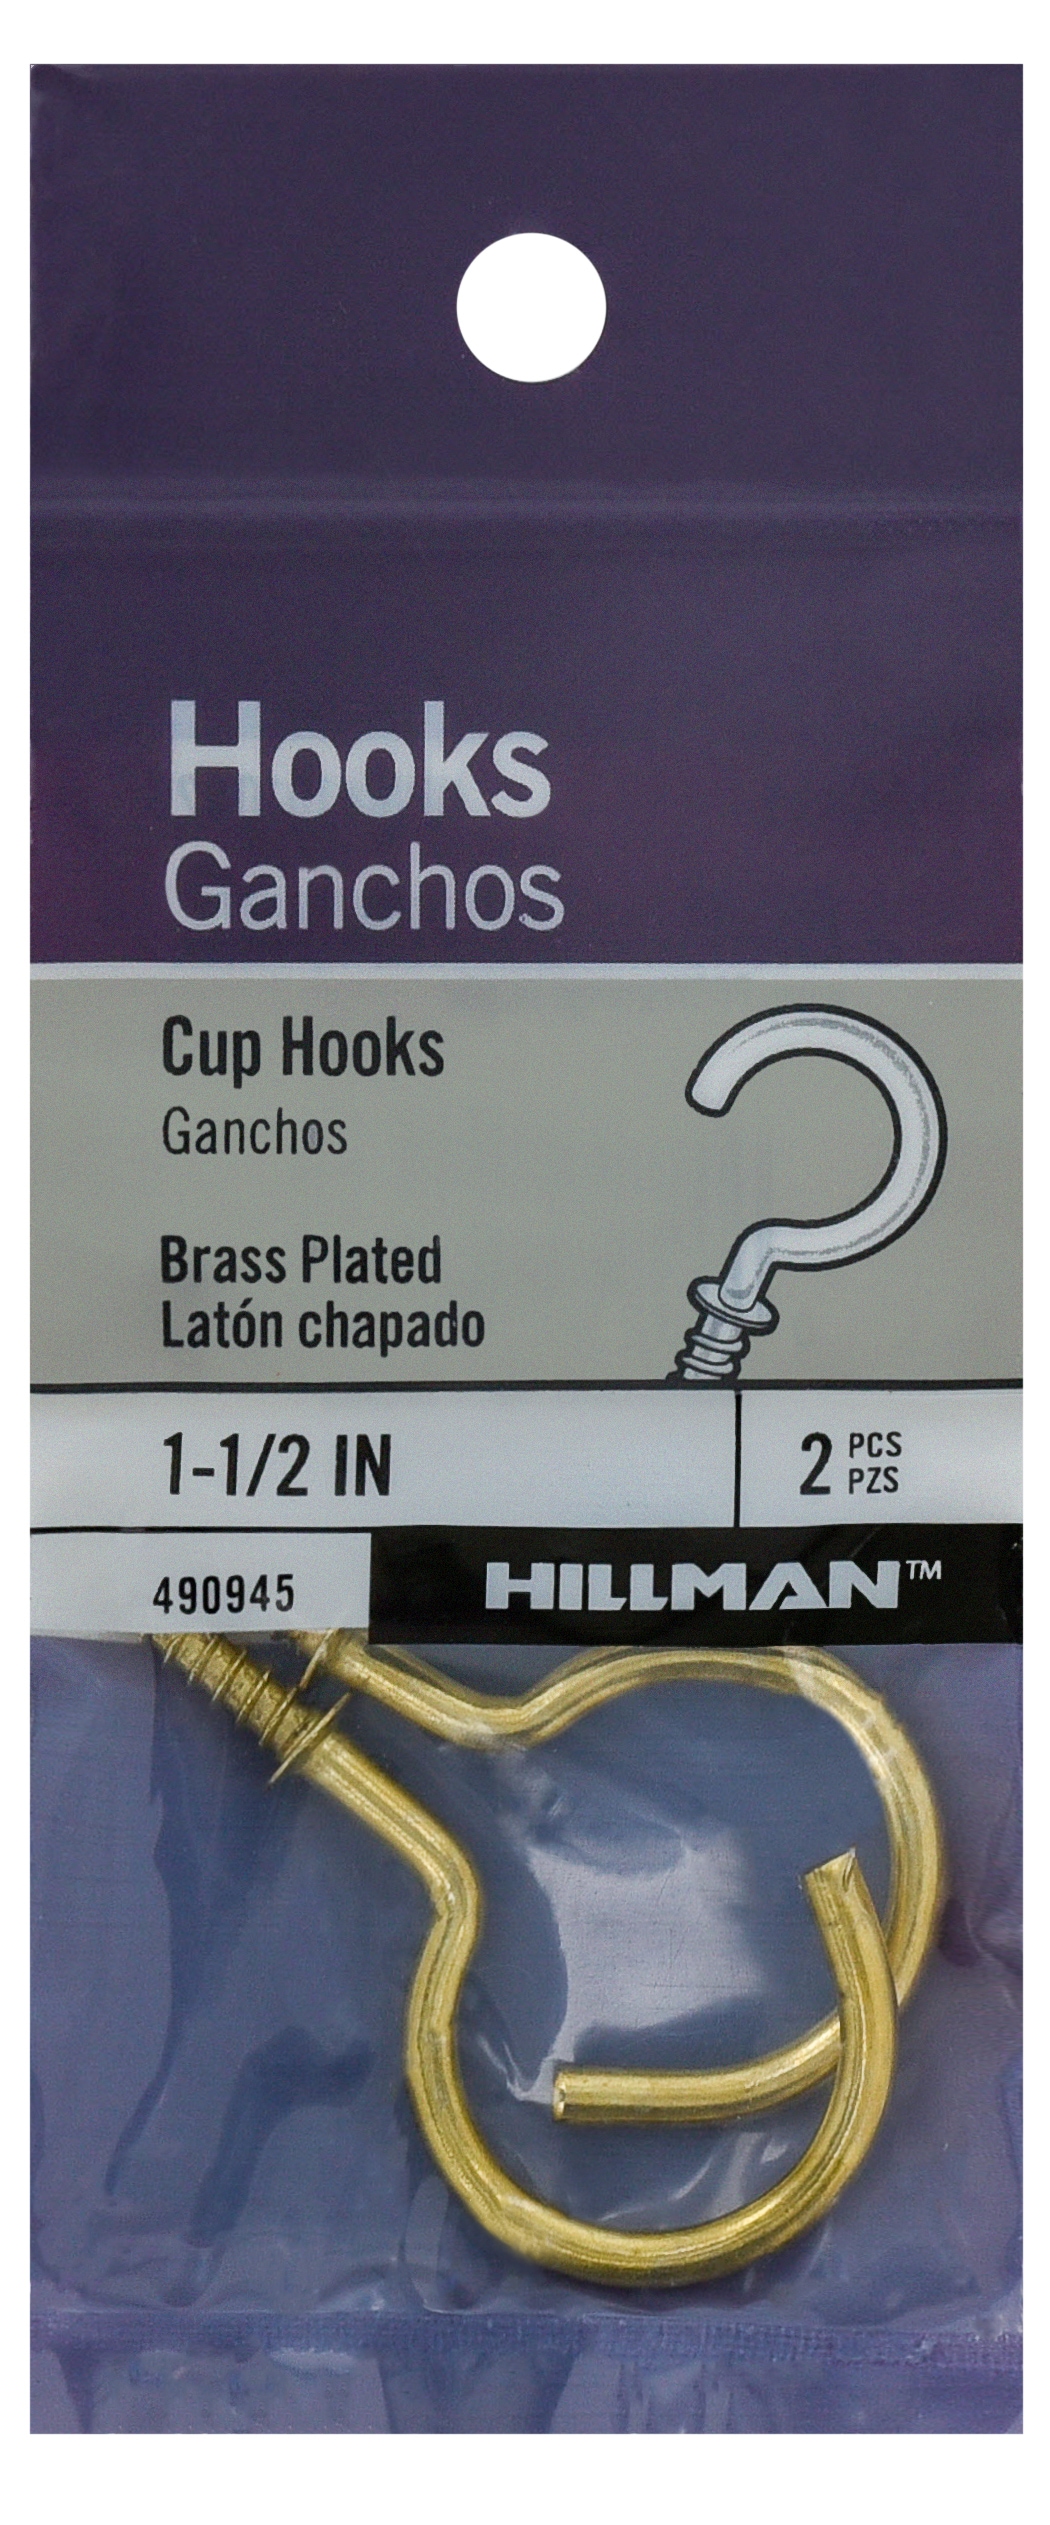 12 Pack Vinyl Coated Ceiling Hooks,Screw-in Mug Hooks,Multi-Function Wall  Hooks Kitchen Hooks Cup Hooks for Indoors Outdoors (White, 1-1/4 Inch)